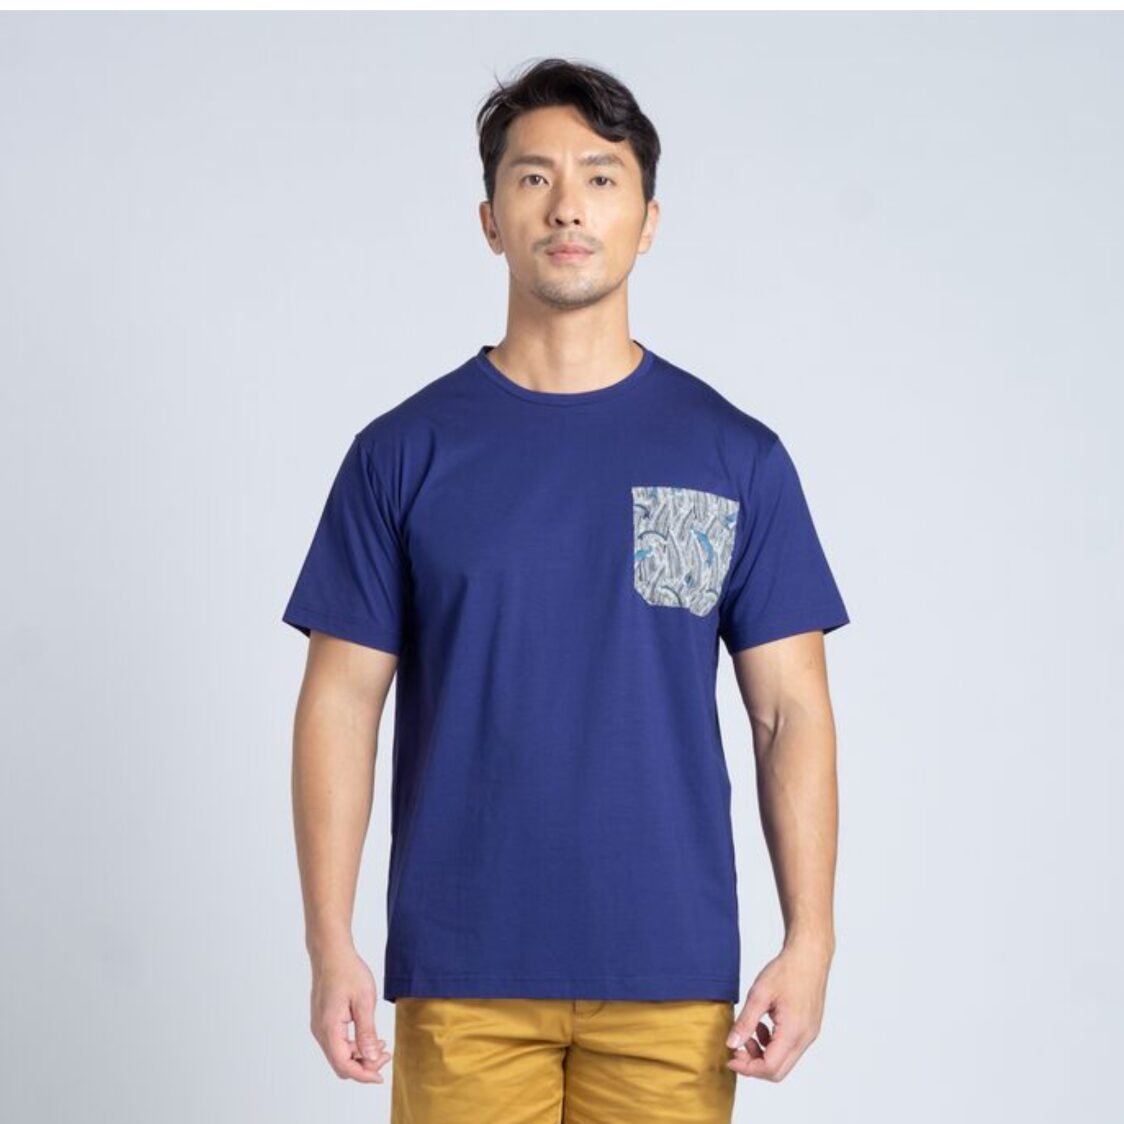 Kurt Woods Made With Liberty Fabric Shiomi Mercerized T-Shirt Navy